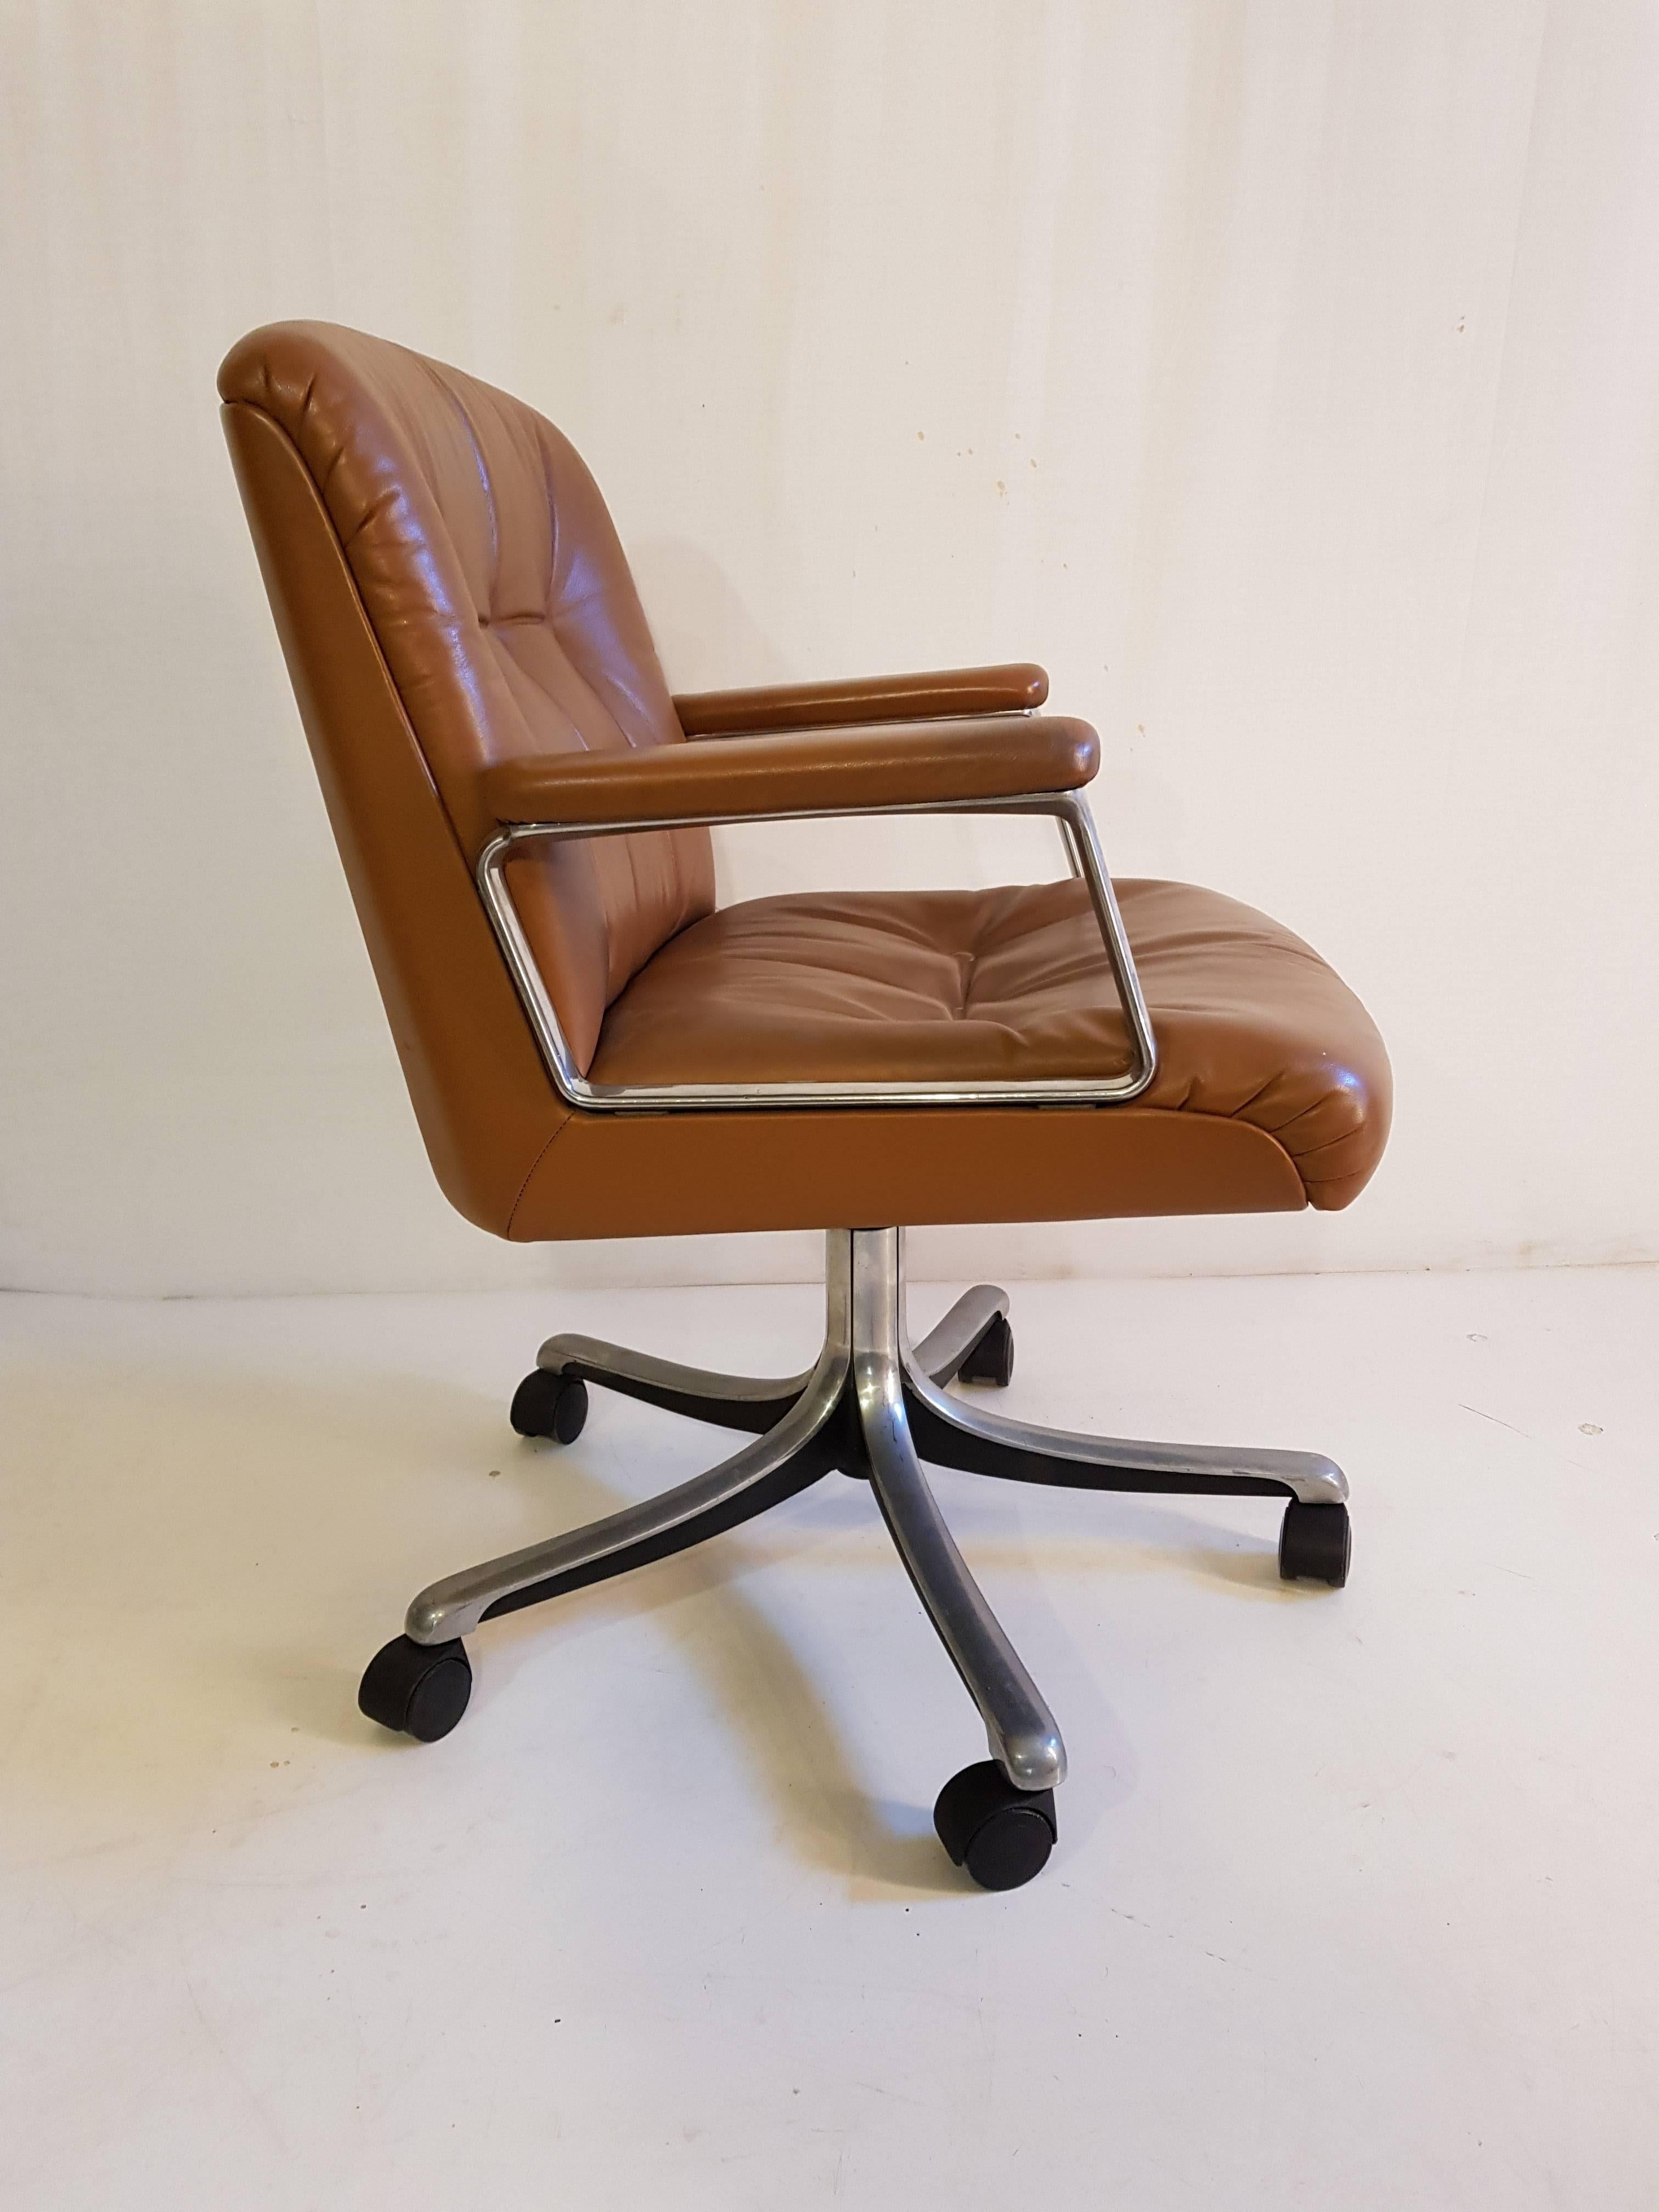 Italian Midcentury Office Chair by Osvaldo Borsani P128 for Tecno Made in Italy